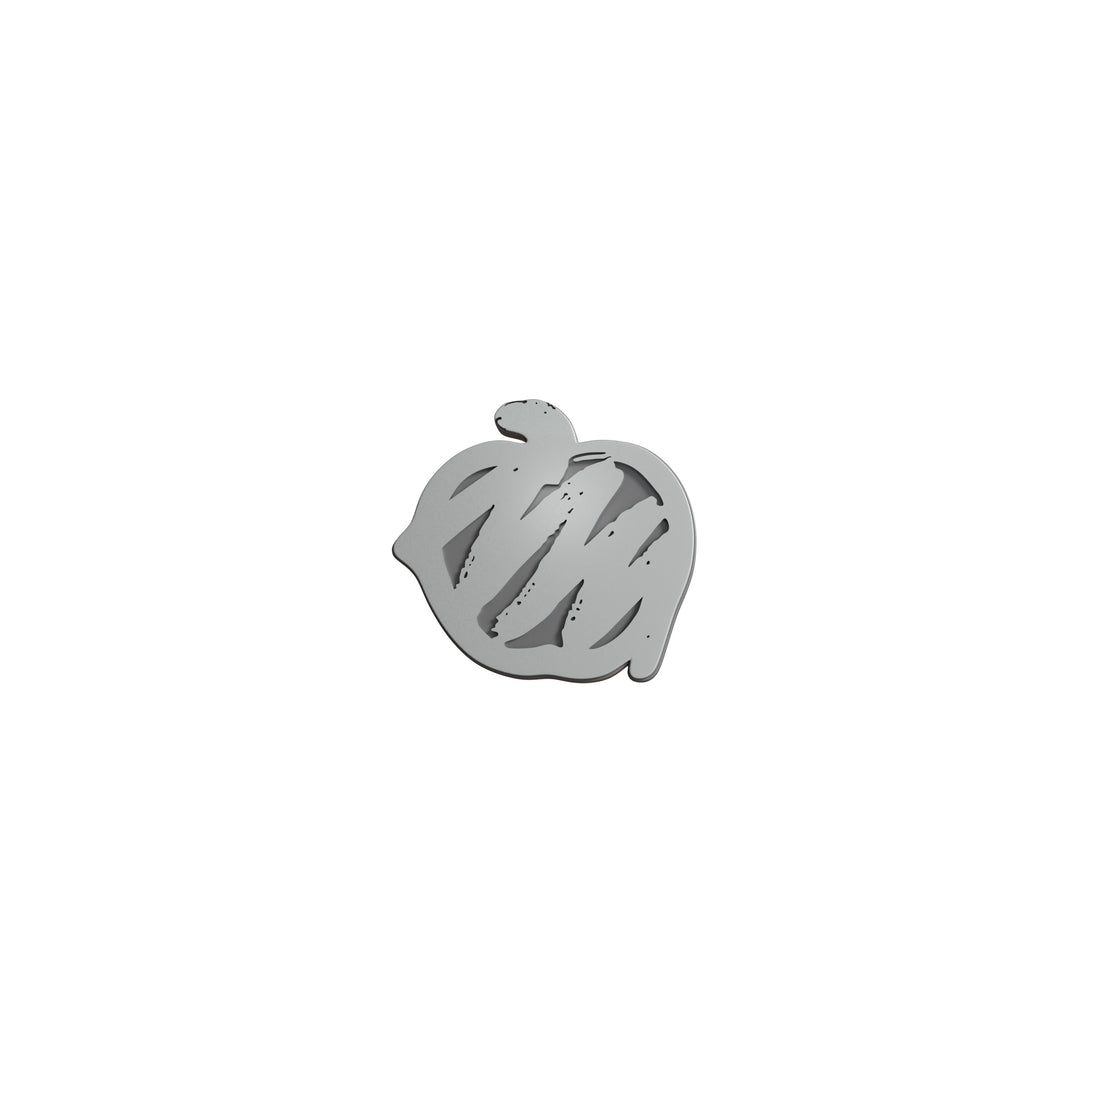 Apple Silver Pin